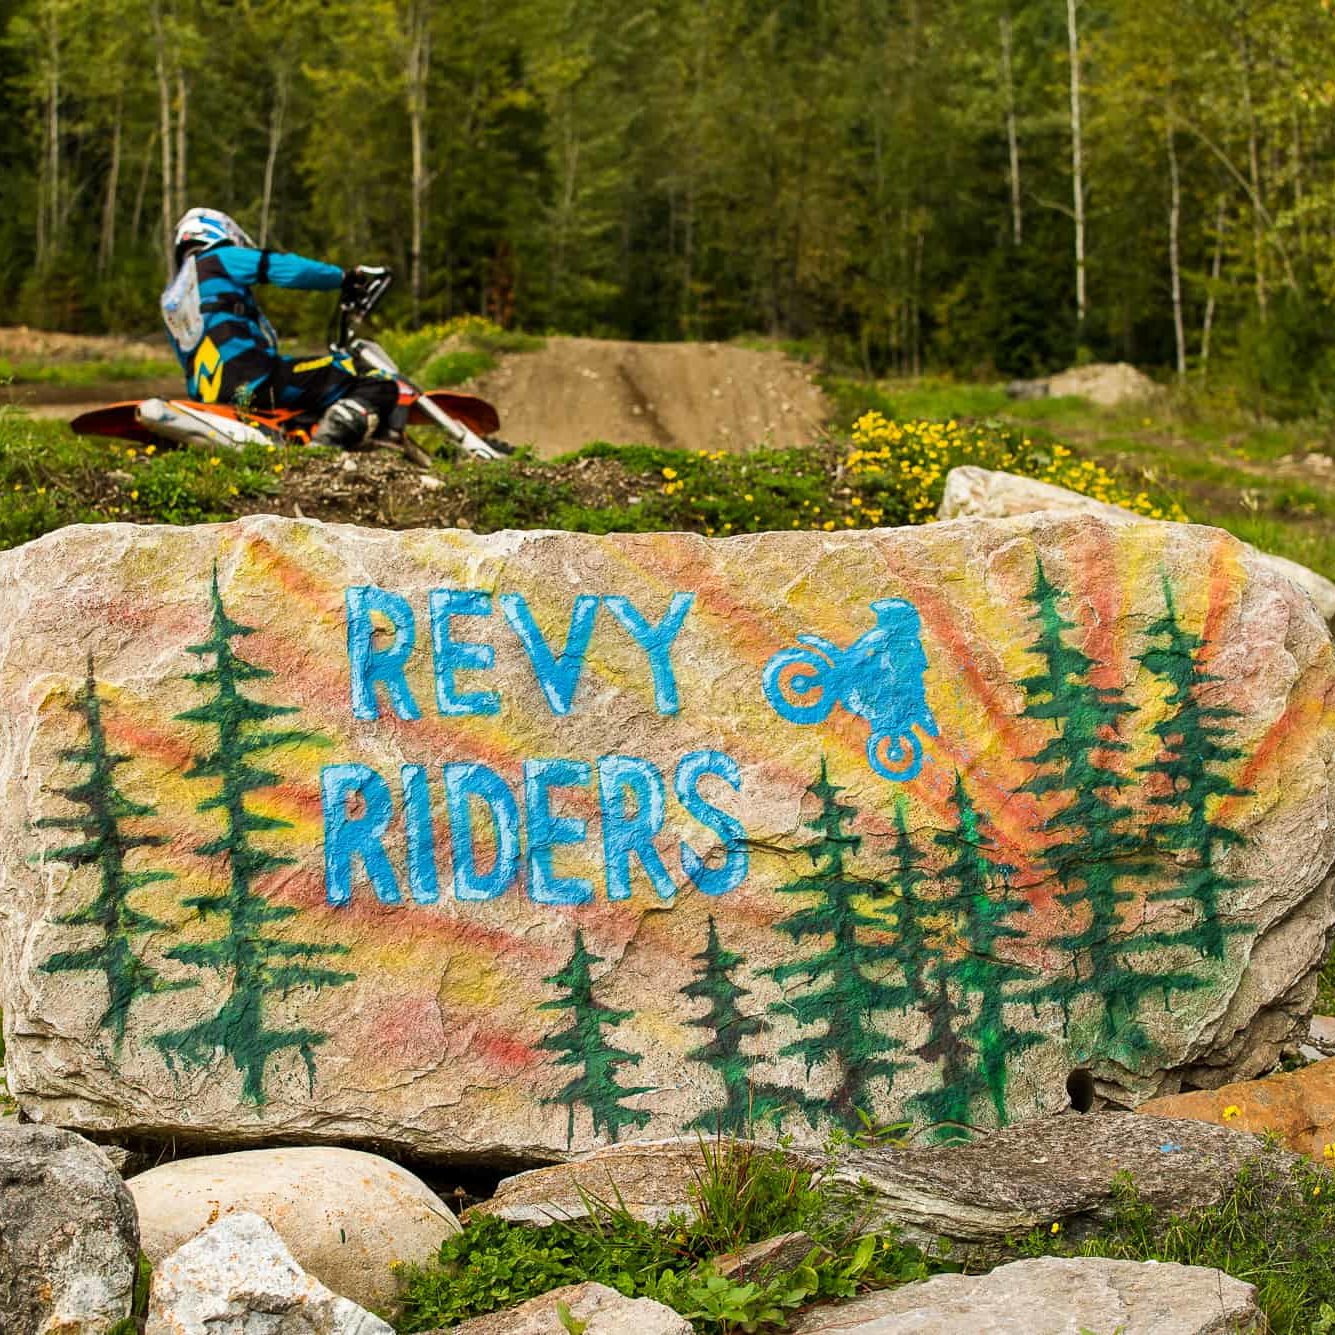 Revy Riders Dirt Bike